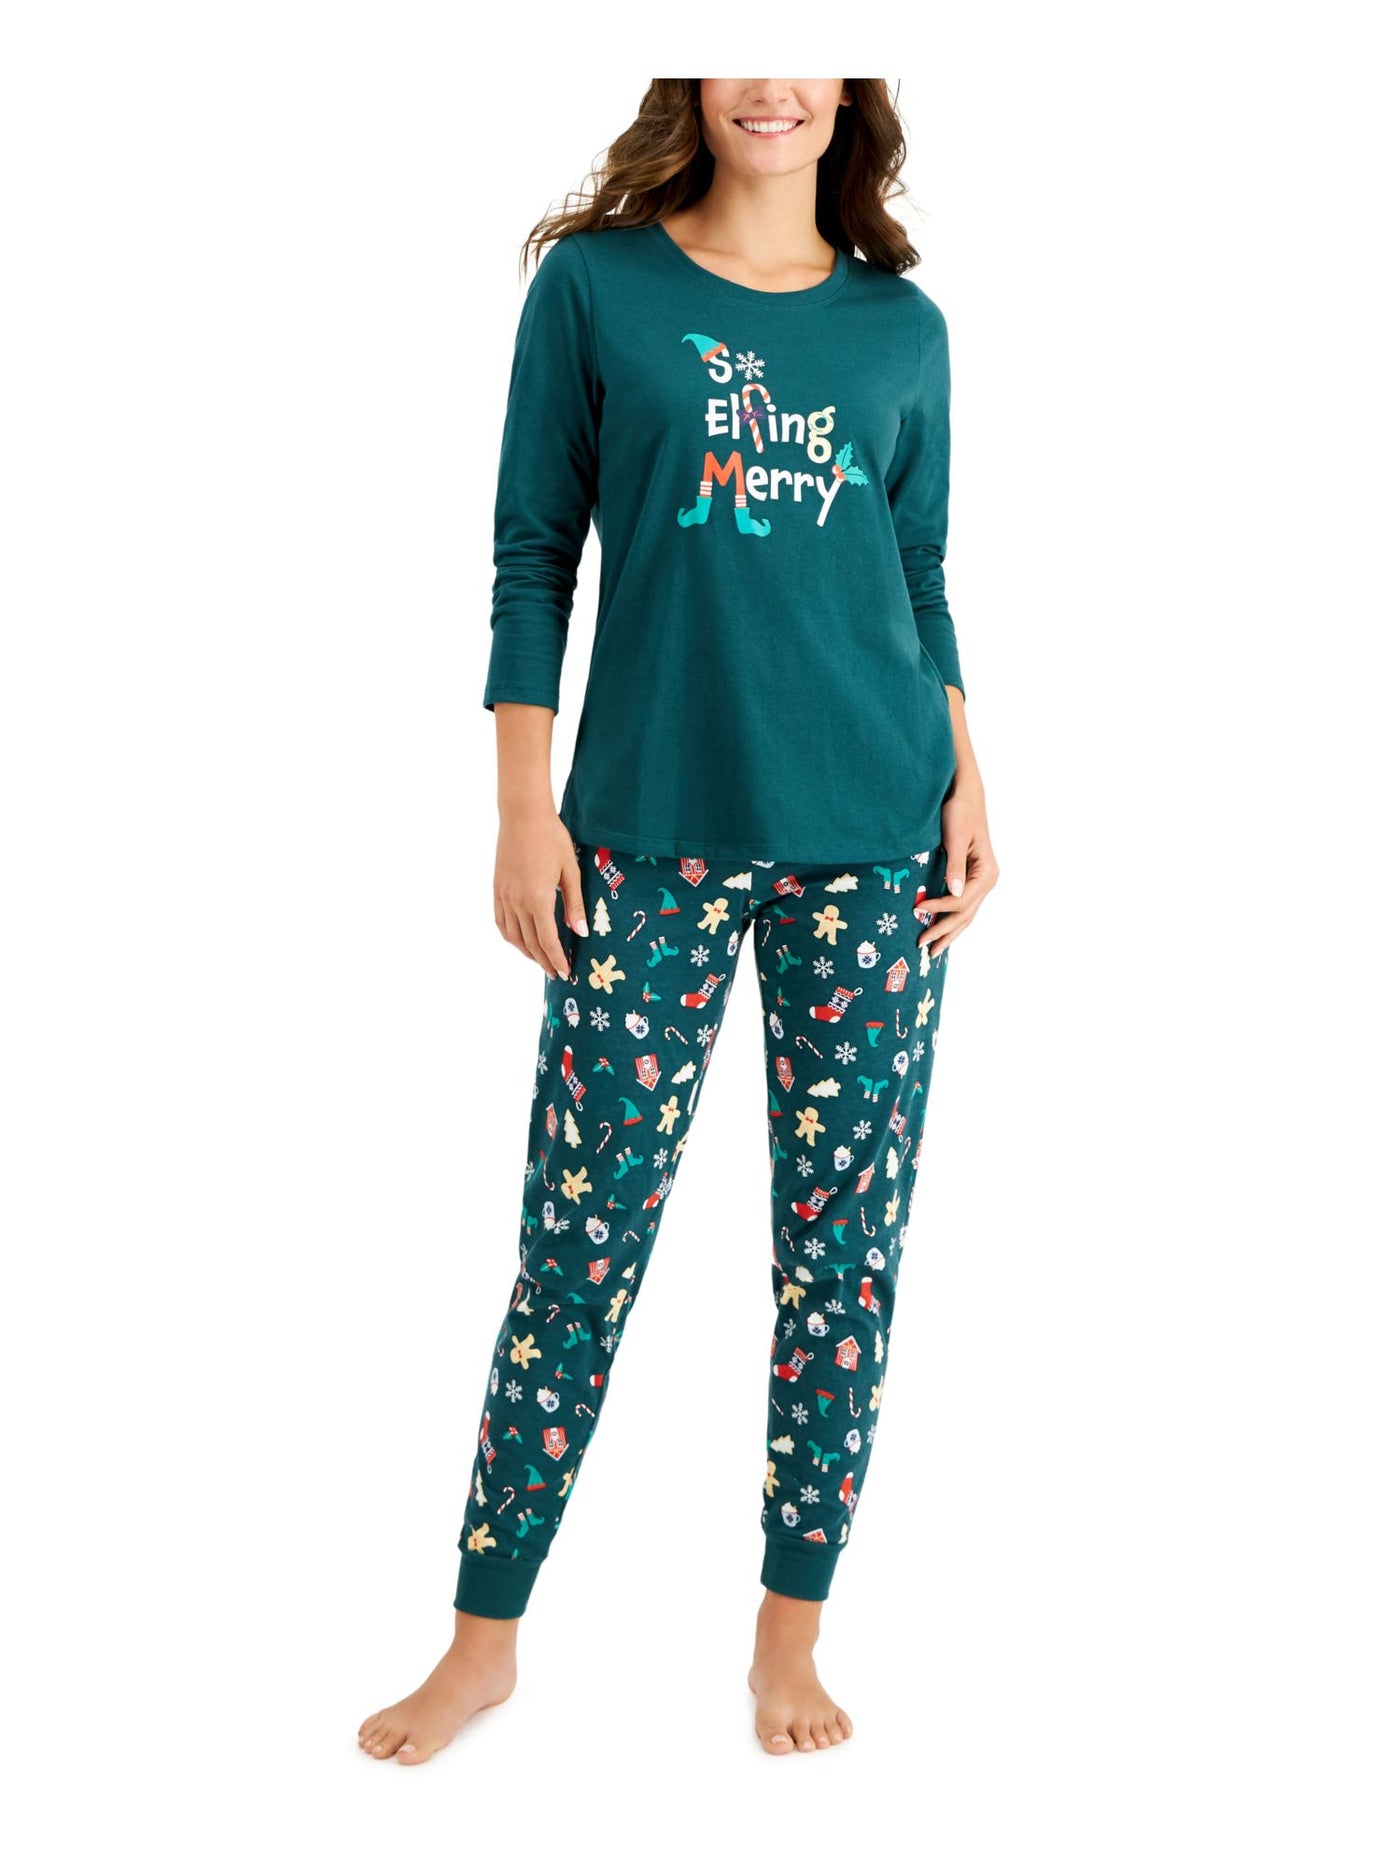 FAMILY PJs Womens Green Graphic Comfort T-Shirt Top Cuffed Pants Pajamas XL